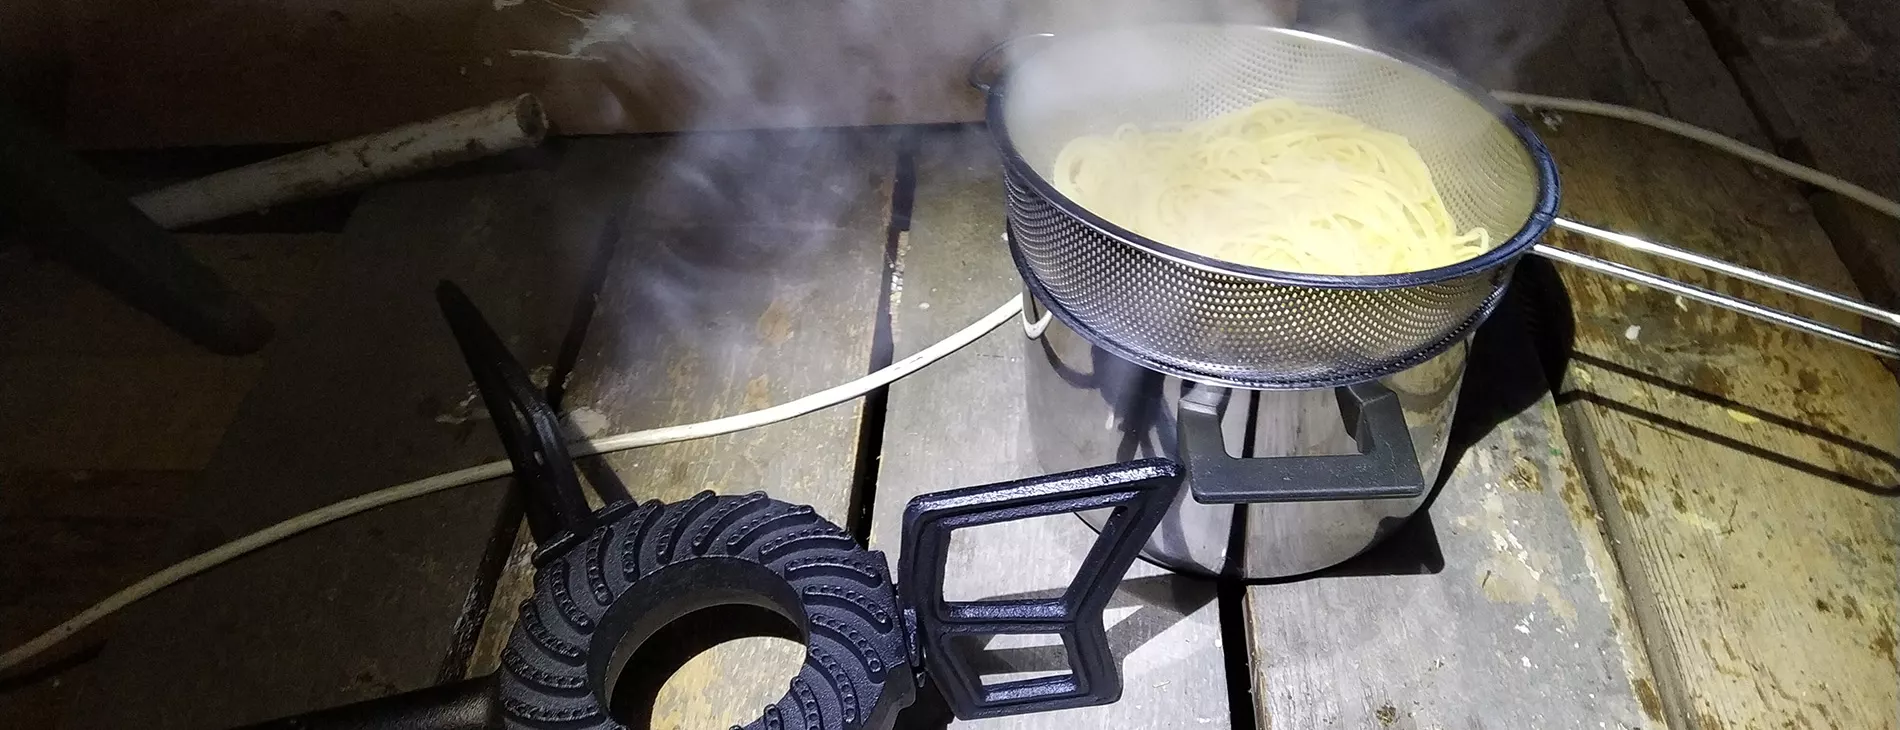 Spaghetti on biogas